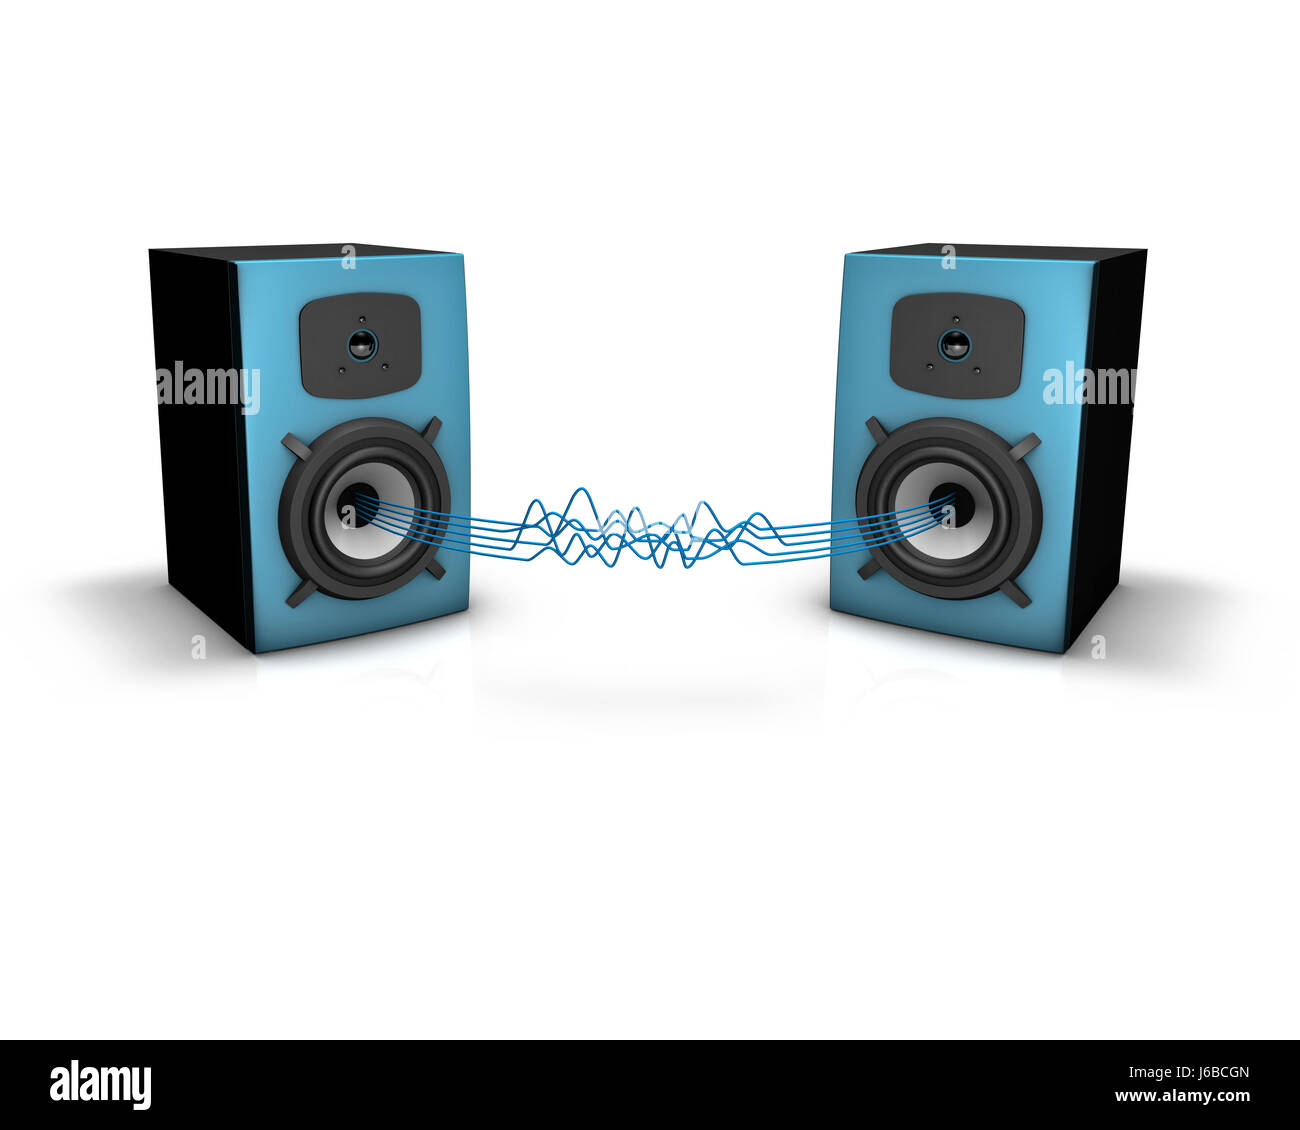 Musik hören laute Lautsprecher Schwingungen Volumen Hintergrund Hintergrund Lautsprecher Stockfoto